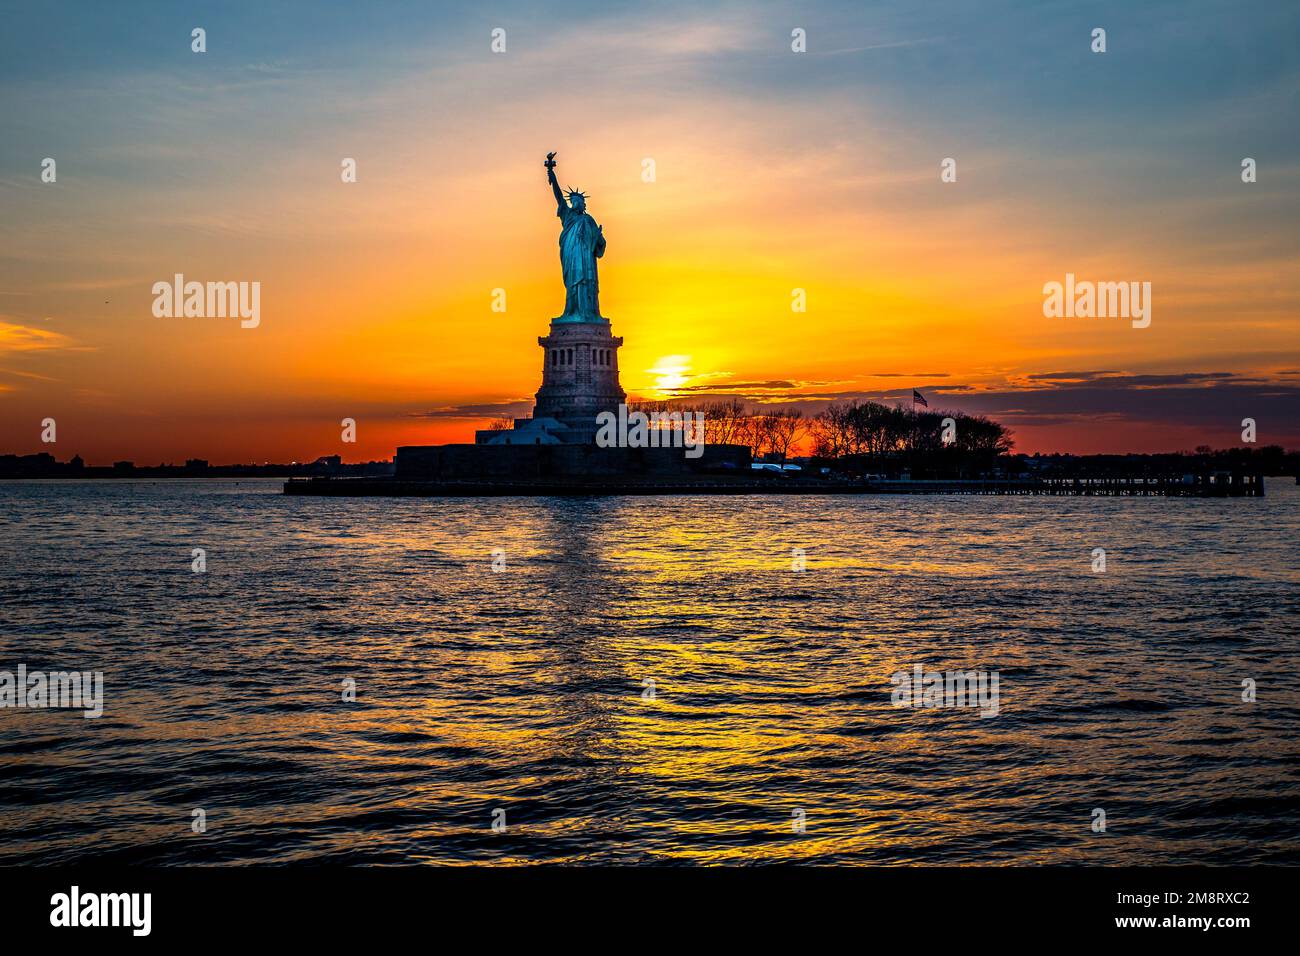 Freiheitsstatue bei Sonnenuntergang -  Statue of Liberty at sunset Stock Photo